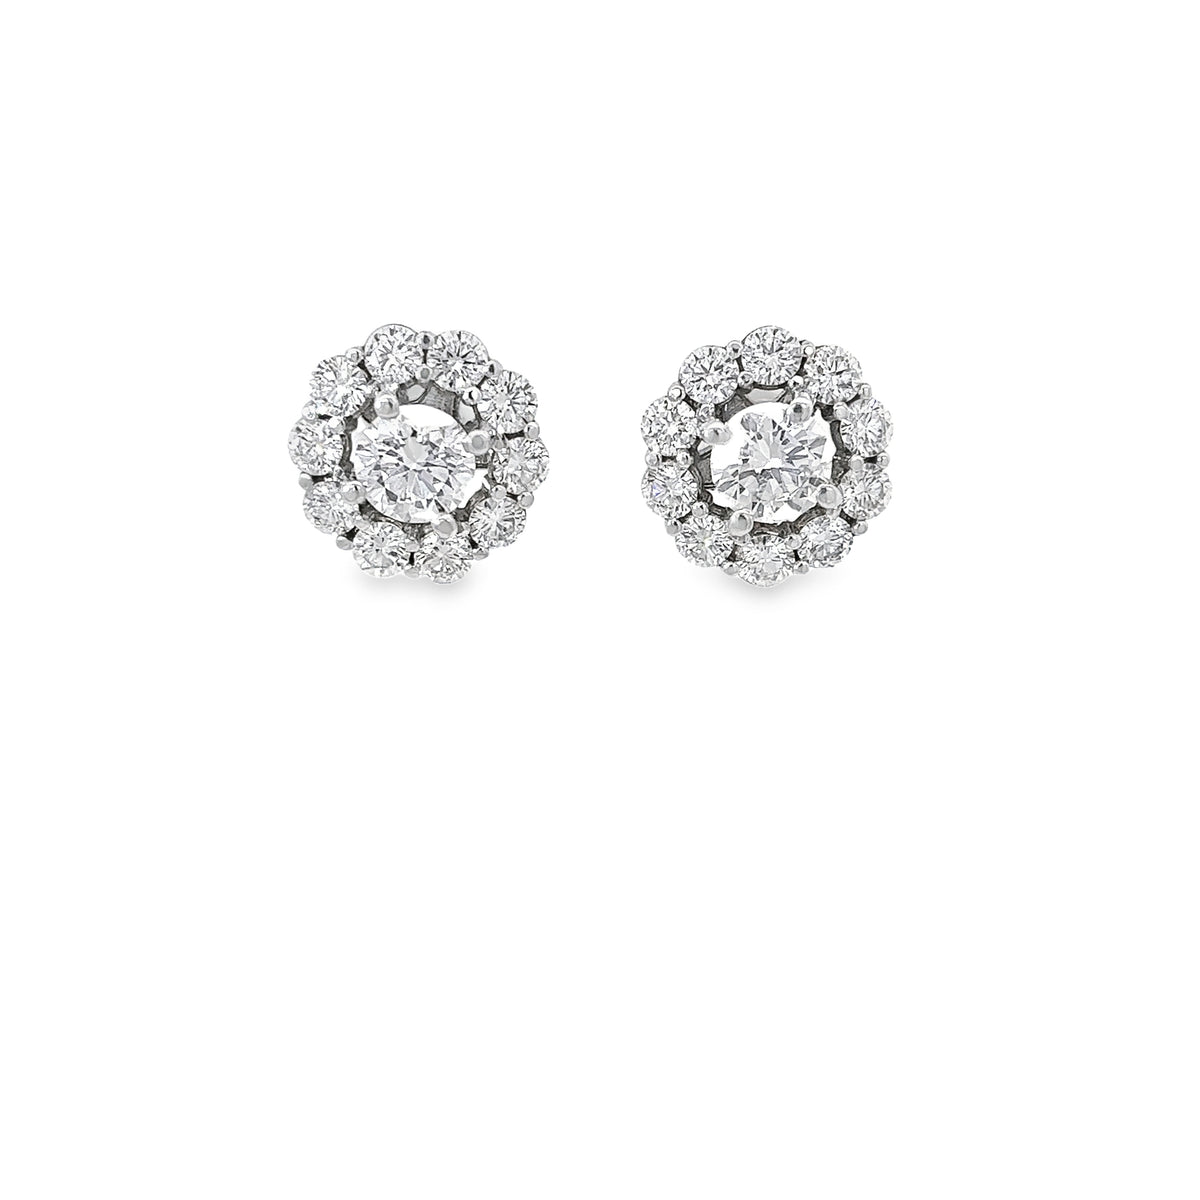 Ladies 14k white gold Diamond Stud earrings with Diamond Halo